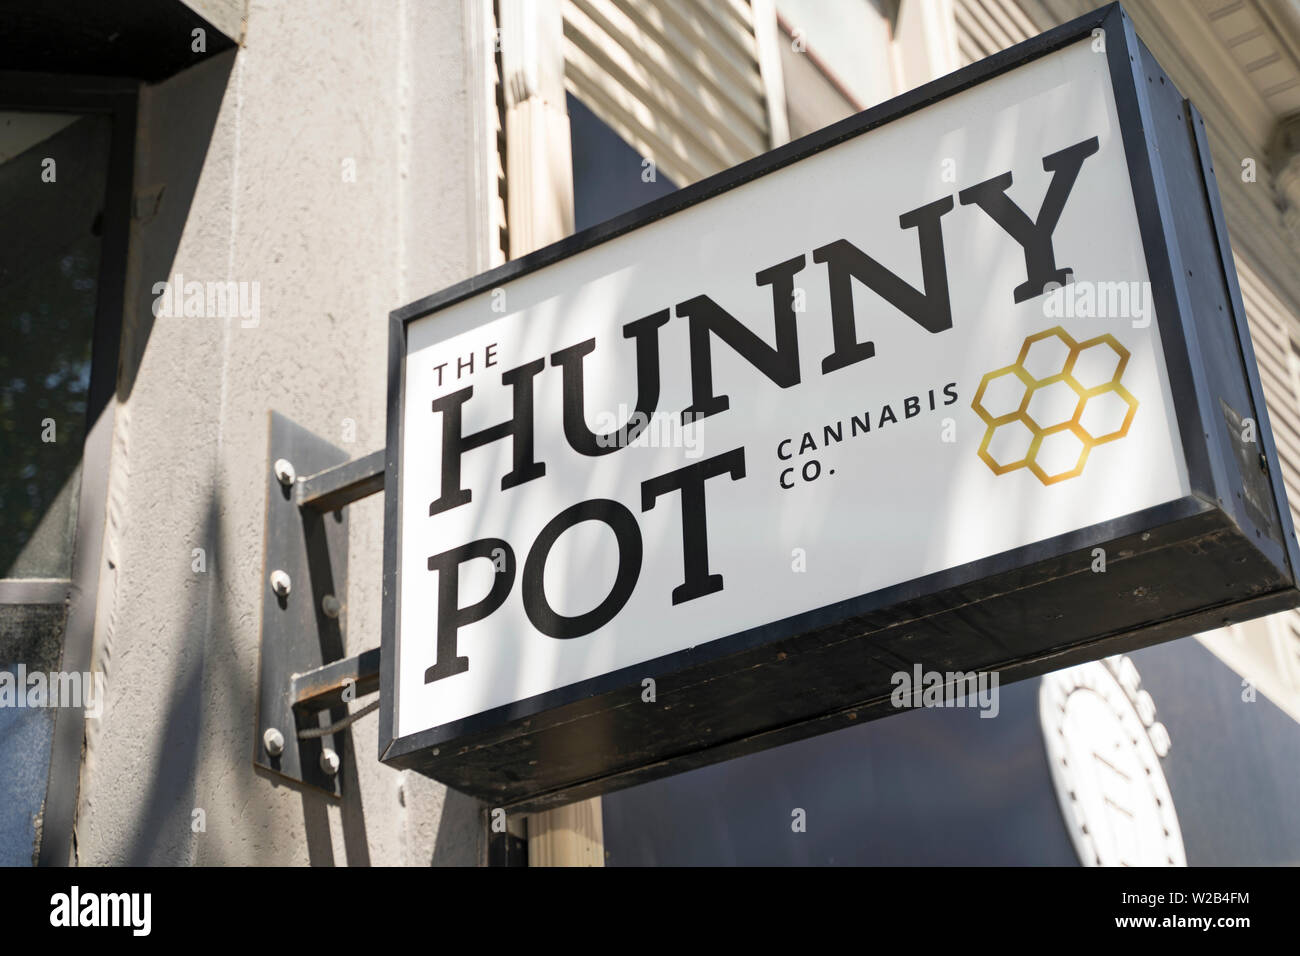 Hunny Topf, die erste legale Cannabis Store in Toronto, Kanada. Marihuana Shop, Store, CBD dispensary. Ontario autorisierten kanadischen Unkraut zu verkaufen. Stockfoto